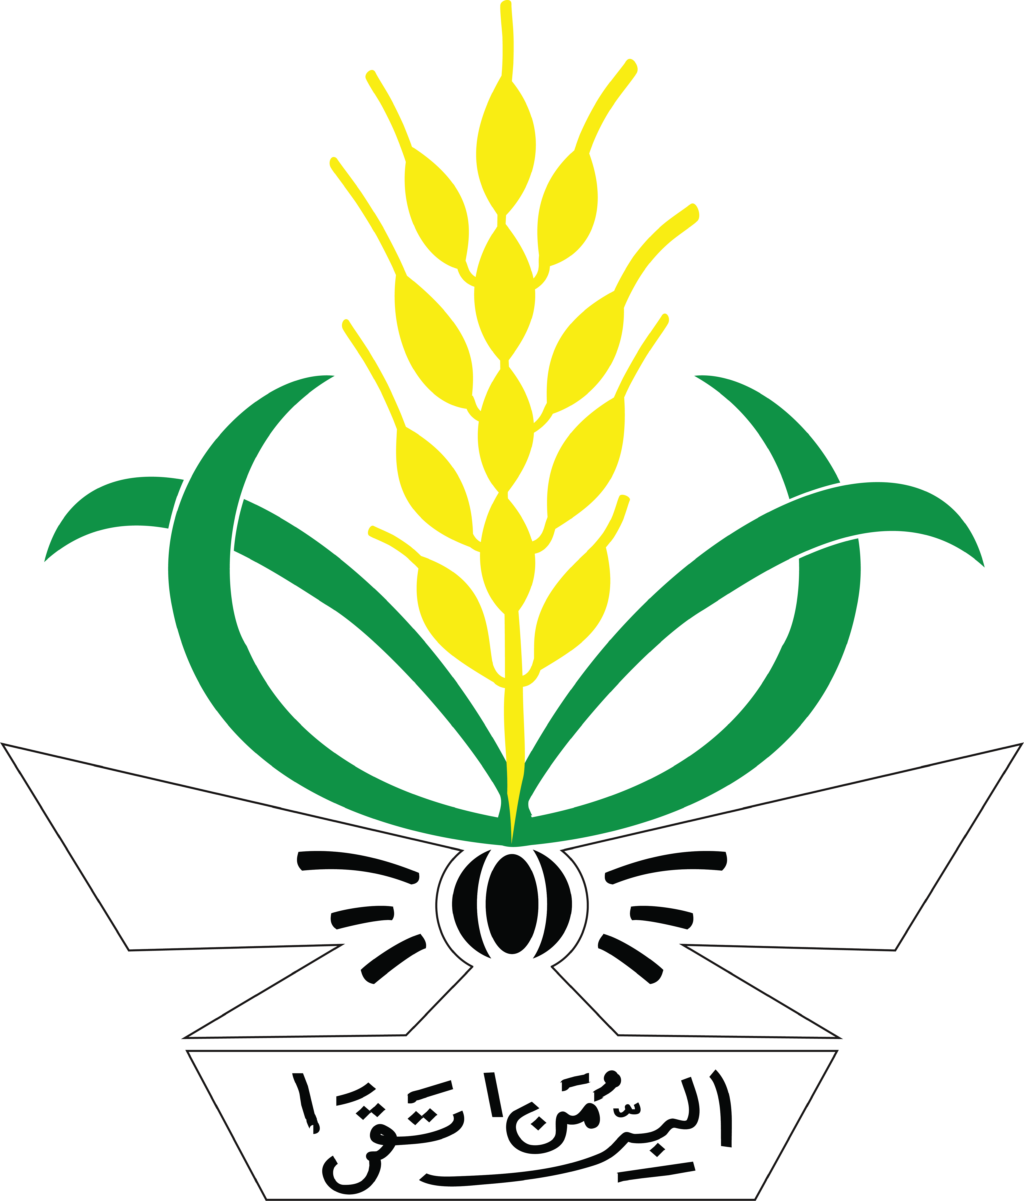 Logo NA